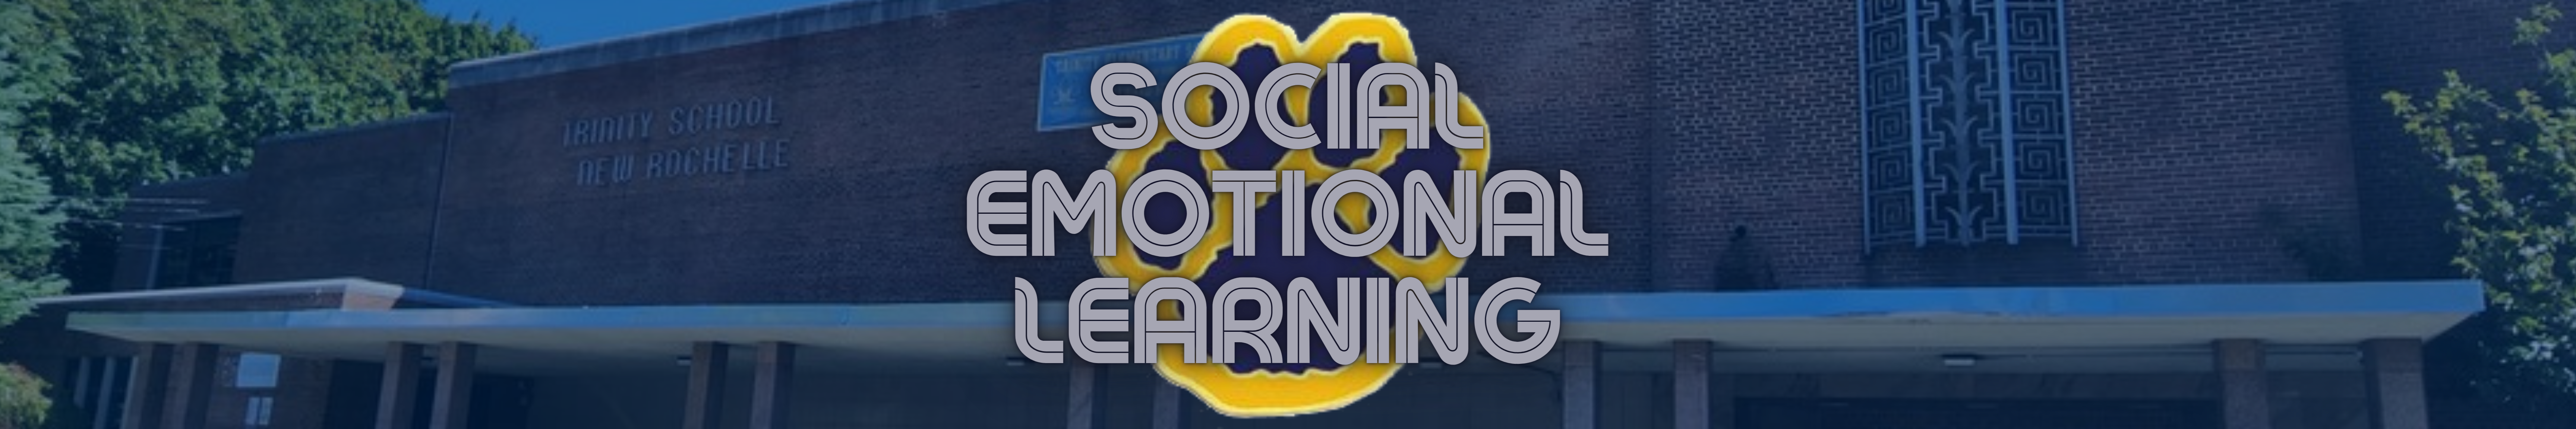 Social Emotional Learning banner